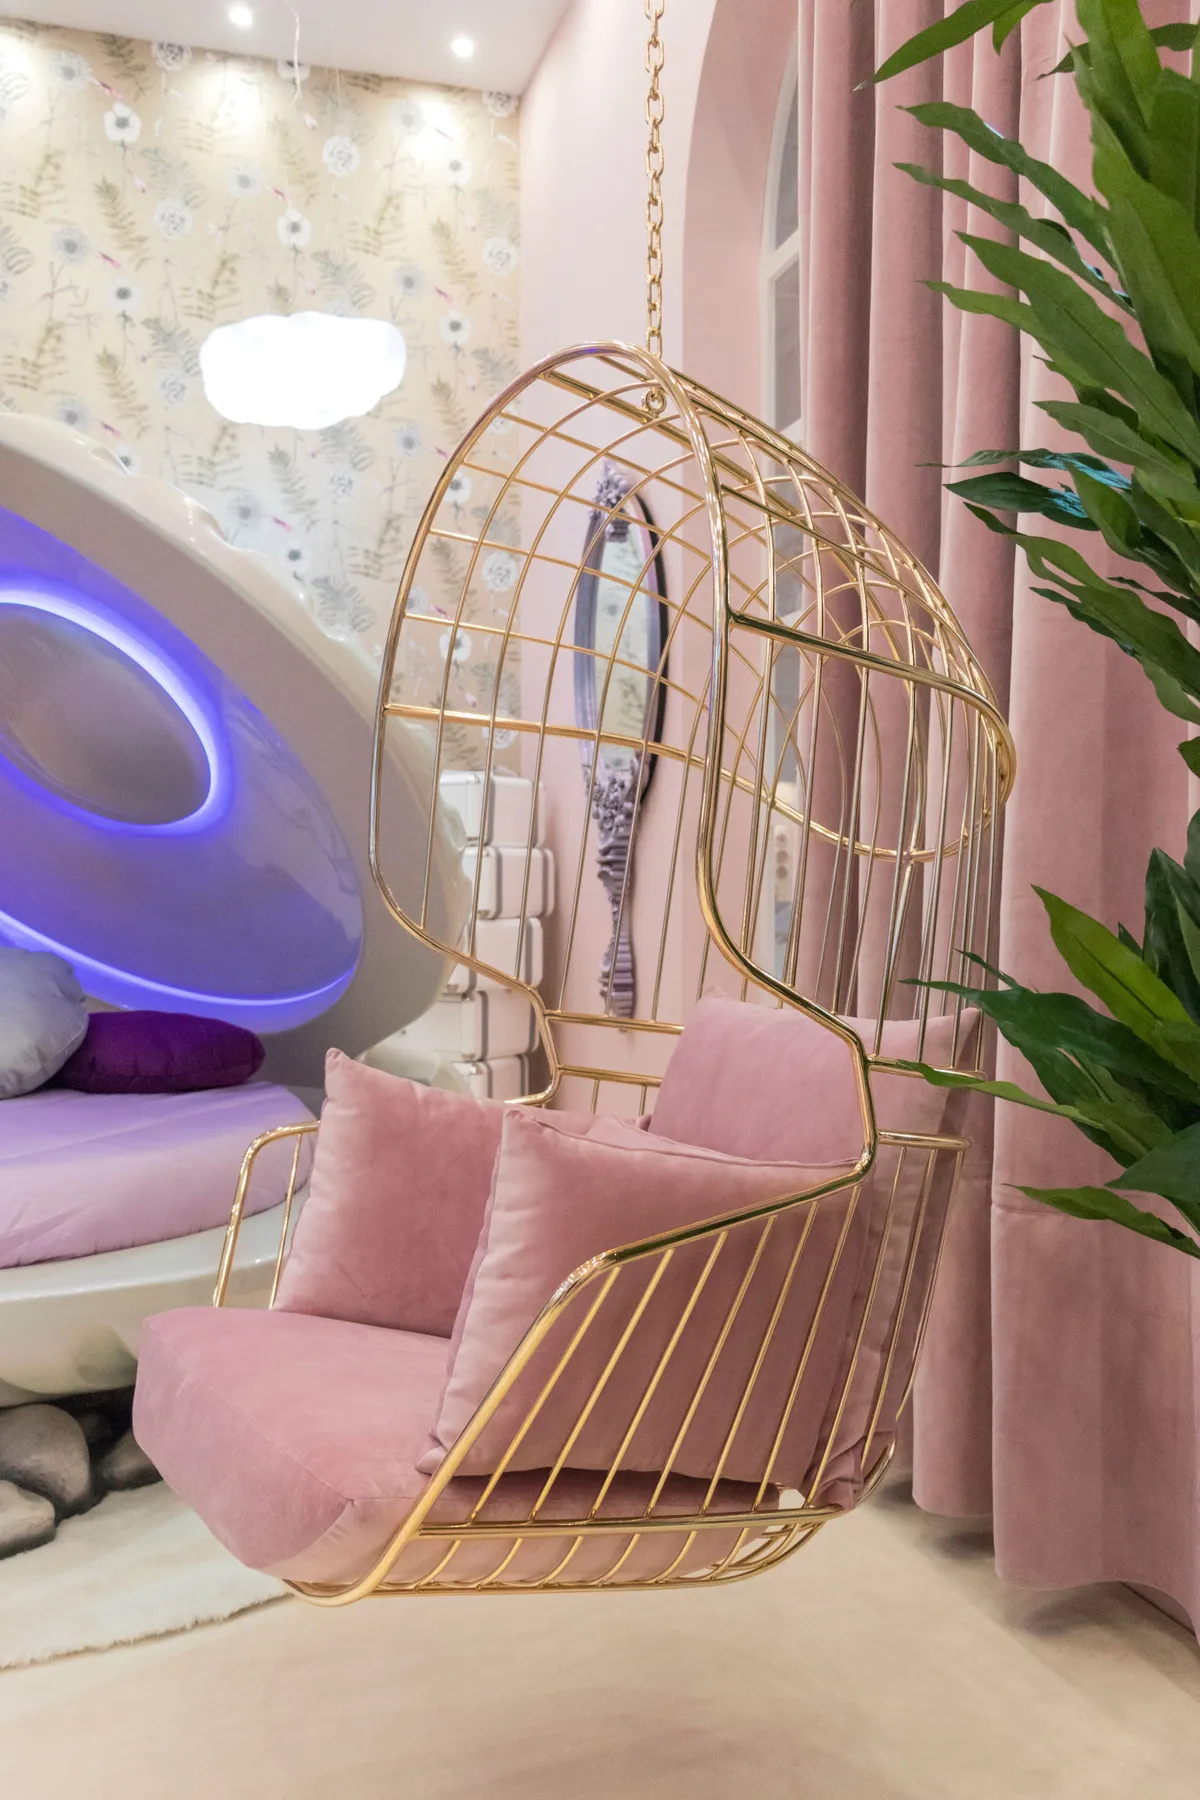 pink bedroom ideas 